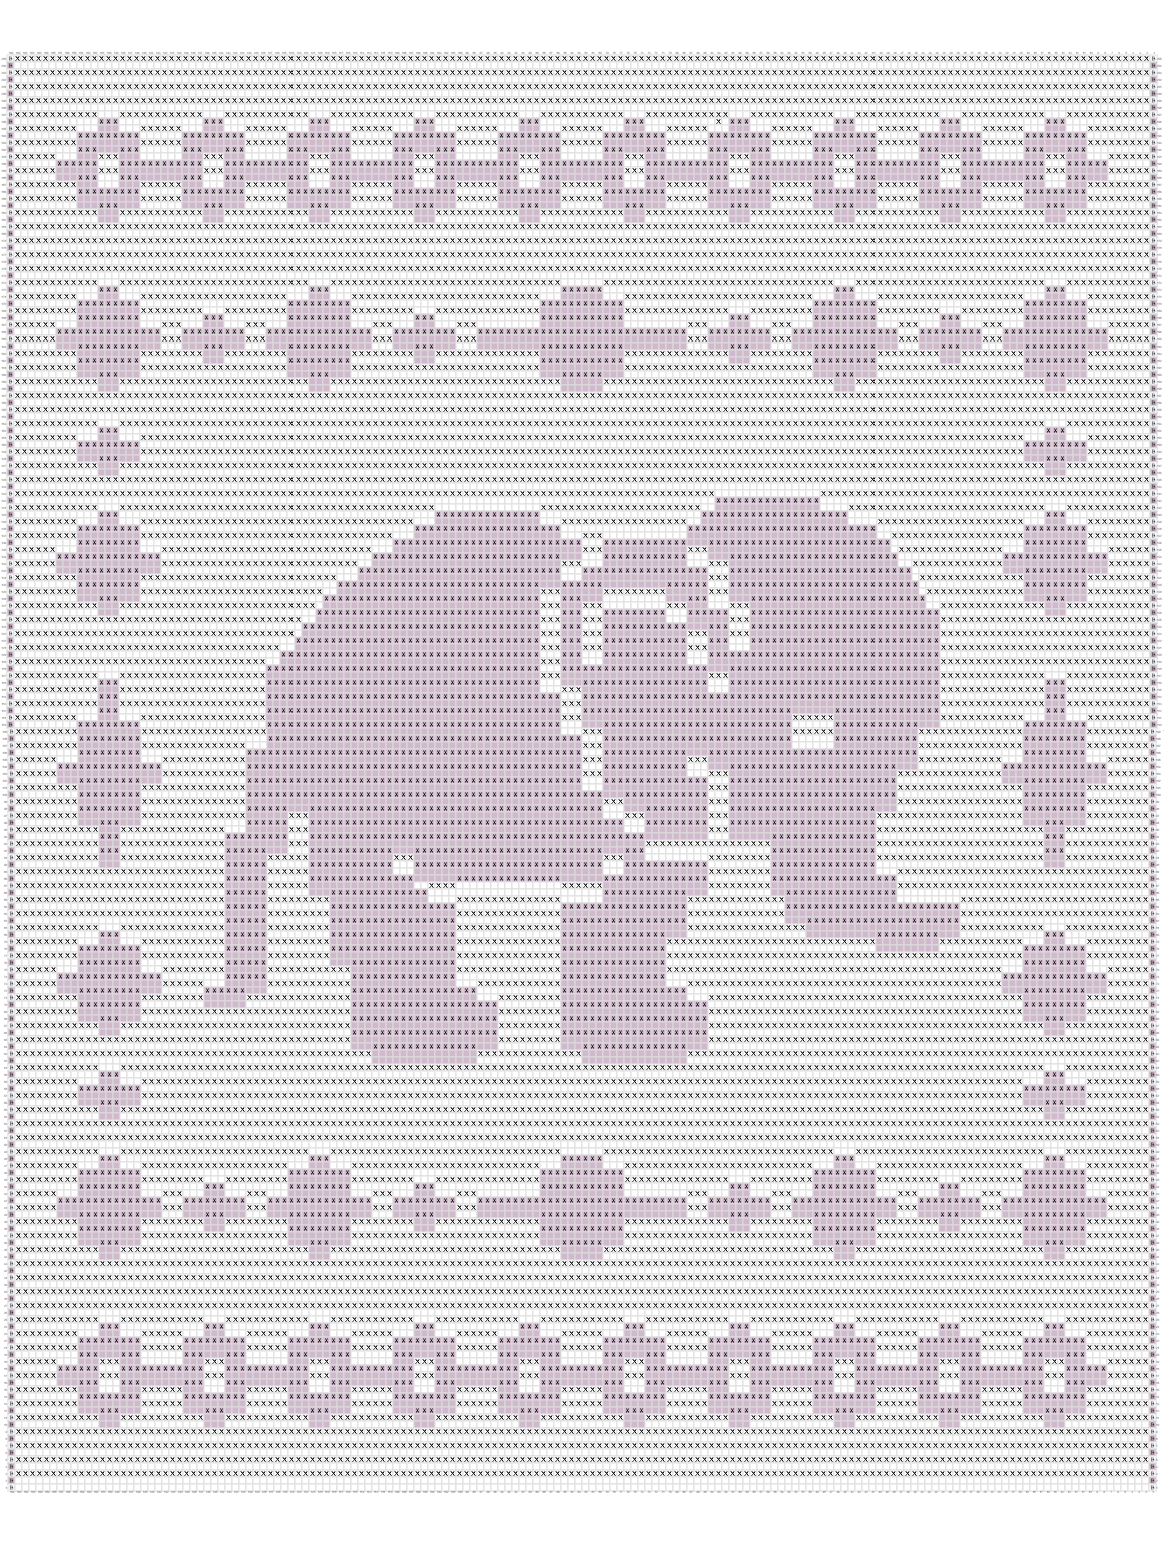 Mosaic Elephant Blanket Chart - Free Crochet Pattern - The Lavender Chair